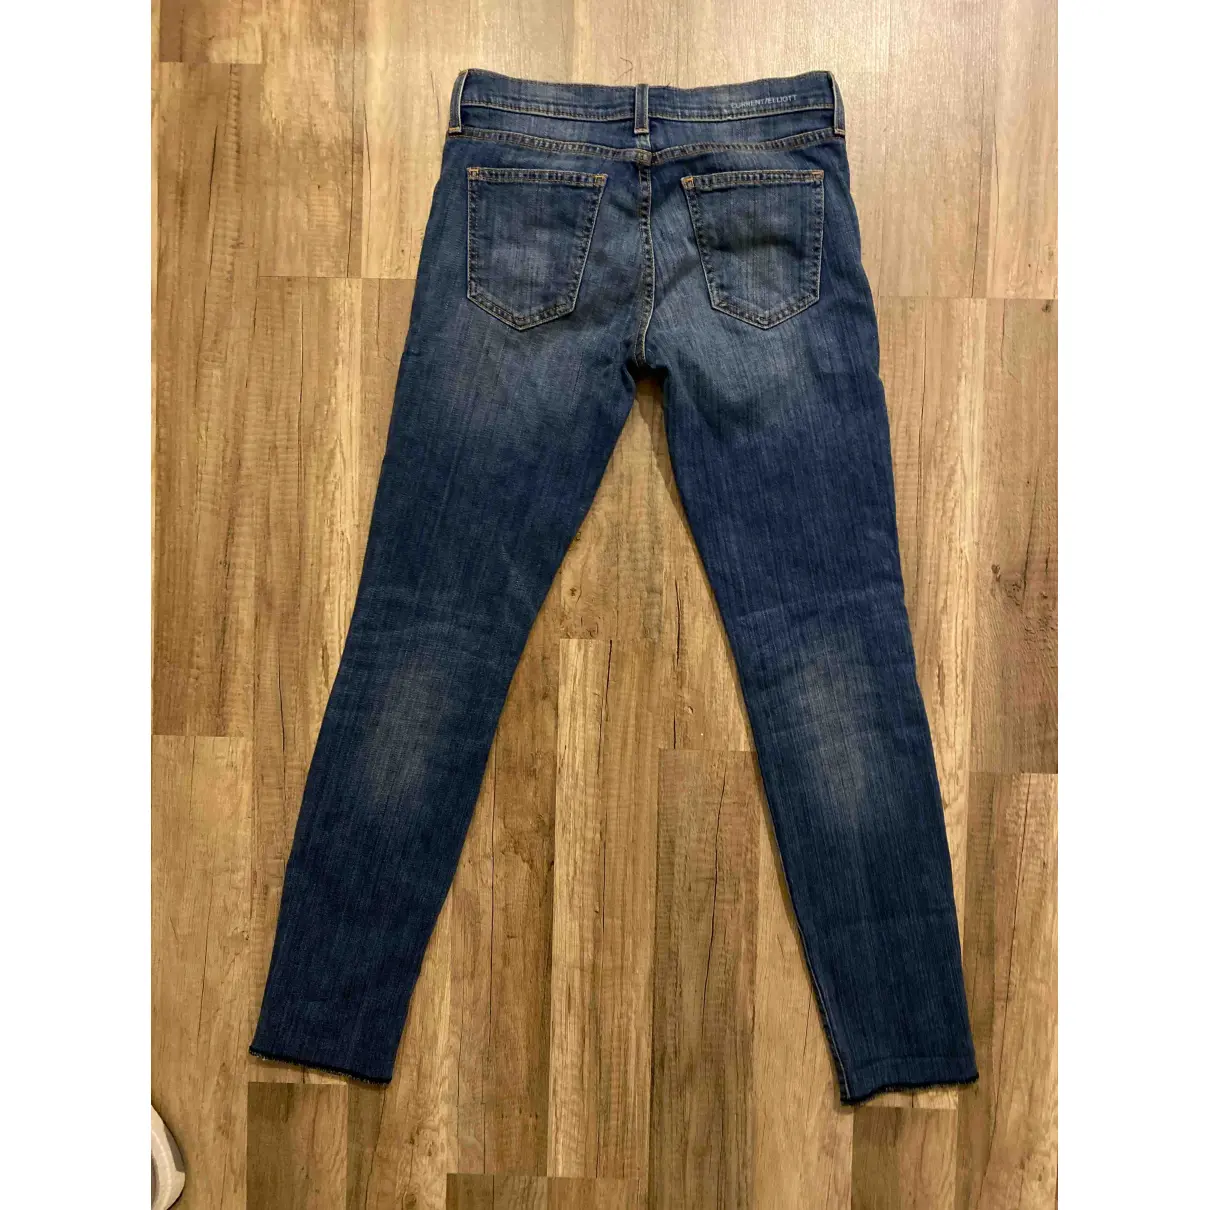 Buy Current Elliott Straight jeans online